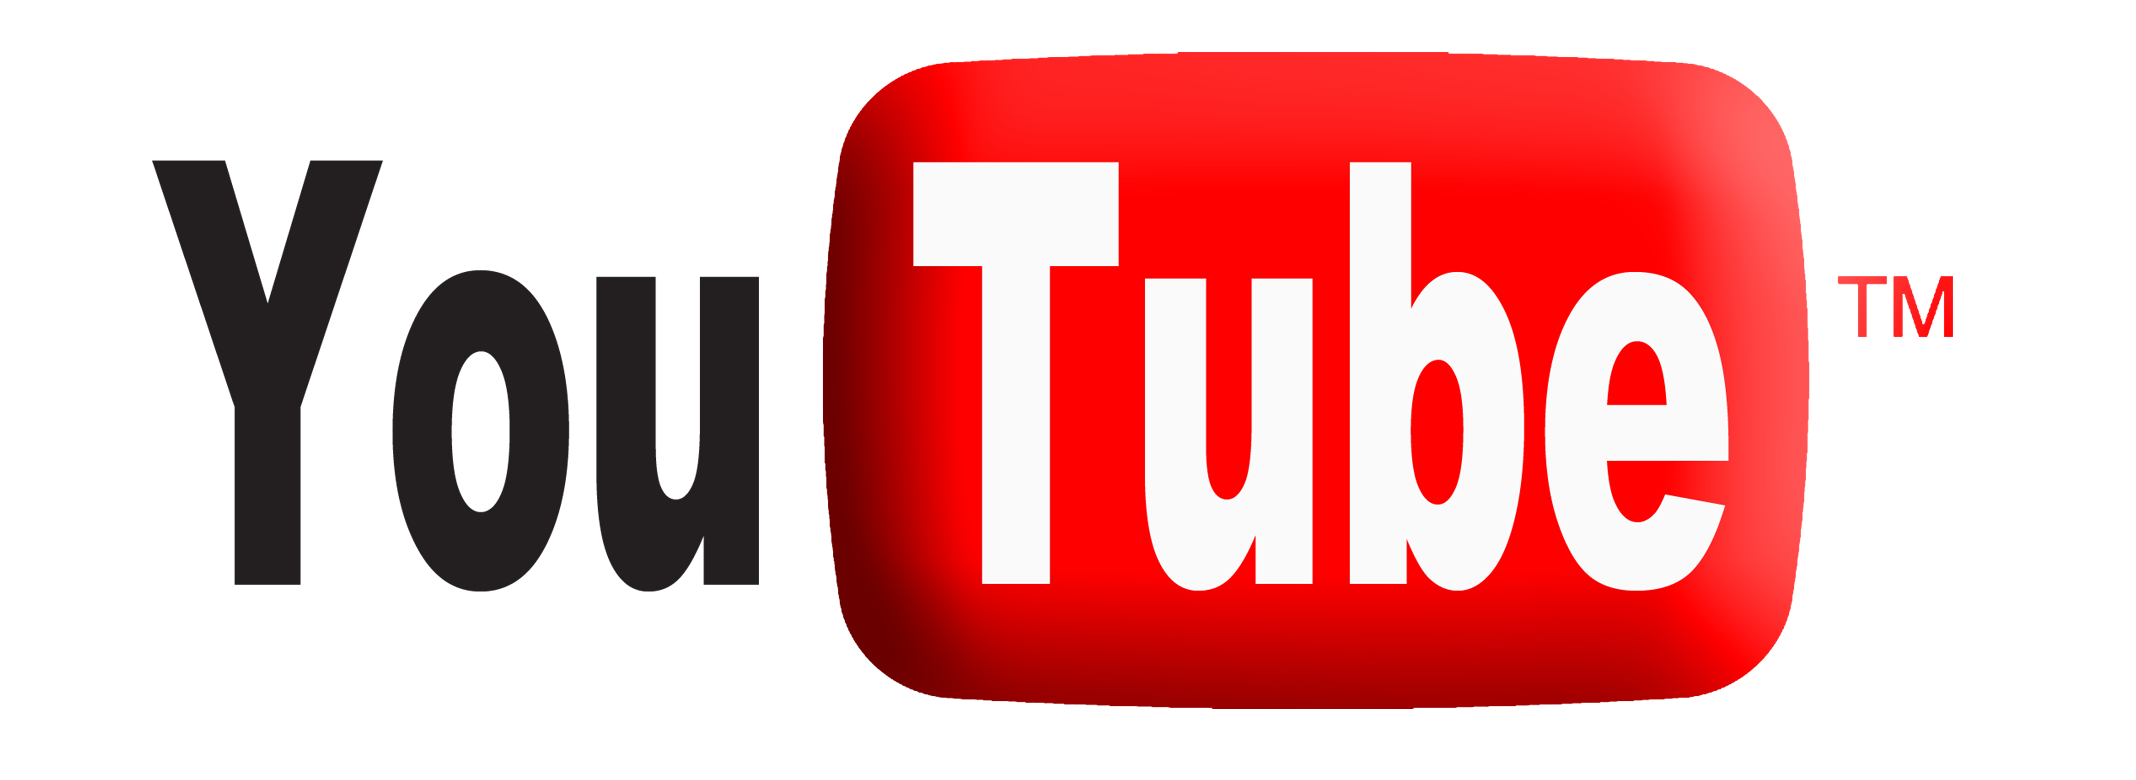 Youtube logo png transparent background download #2064 - Free